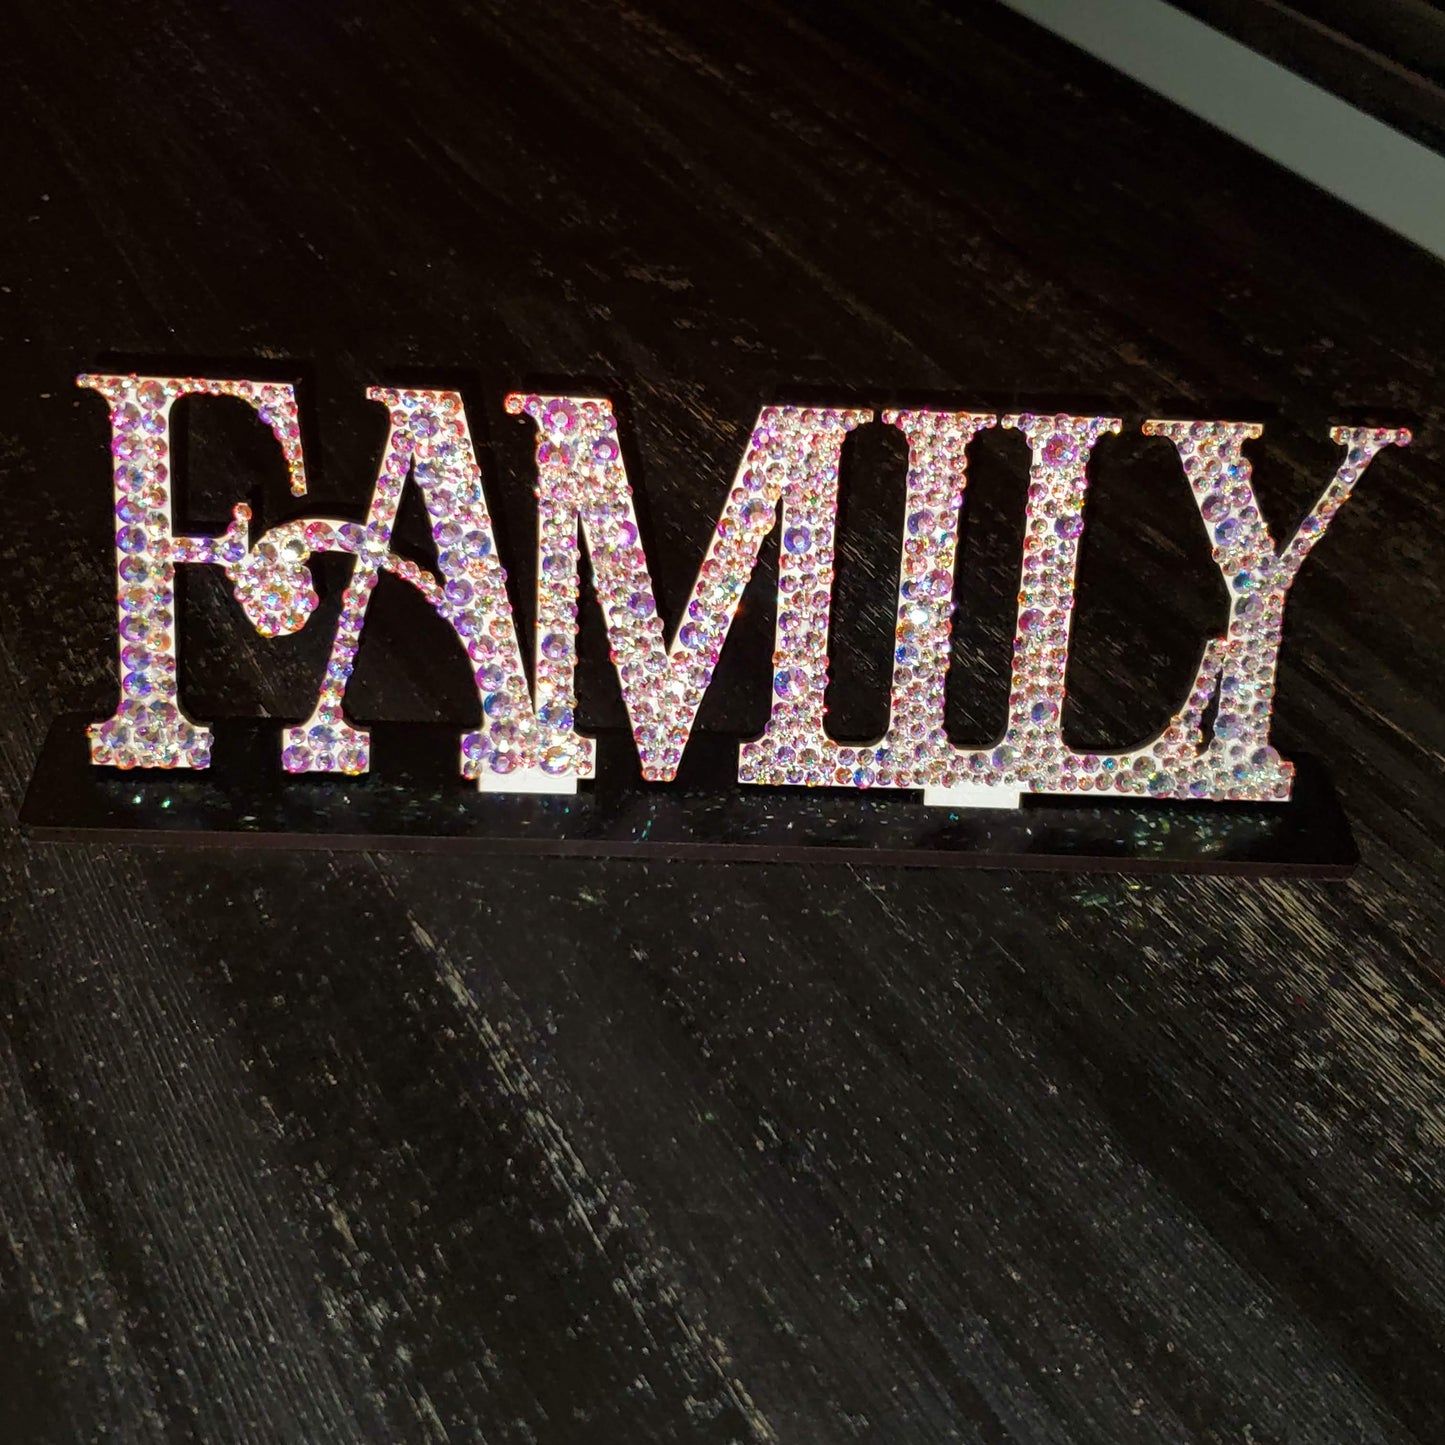 Family Word art crafts are perfect to embellish with rhinestones. - Rhinestone - Flatback rhinestones - 5⭐rated